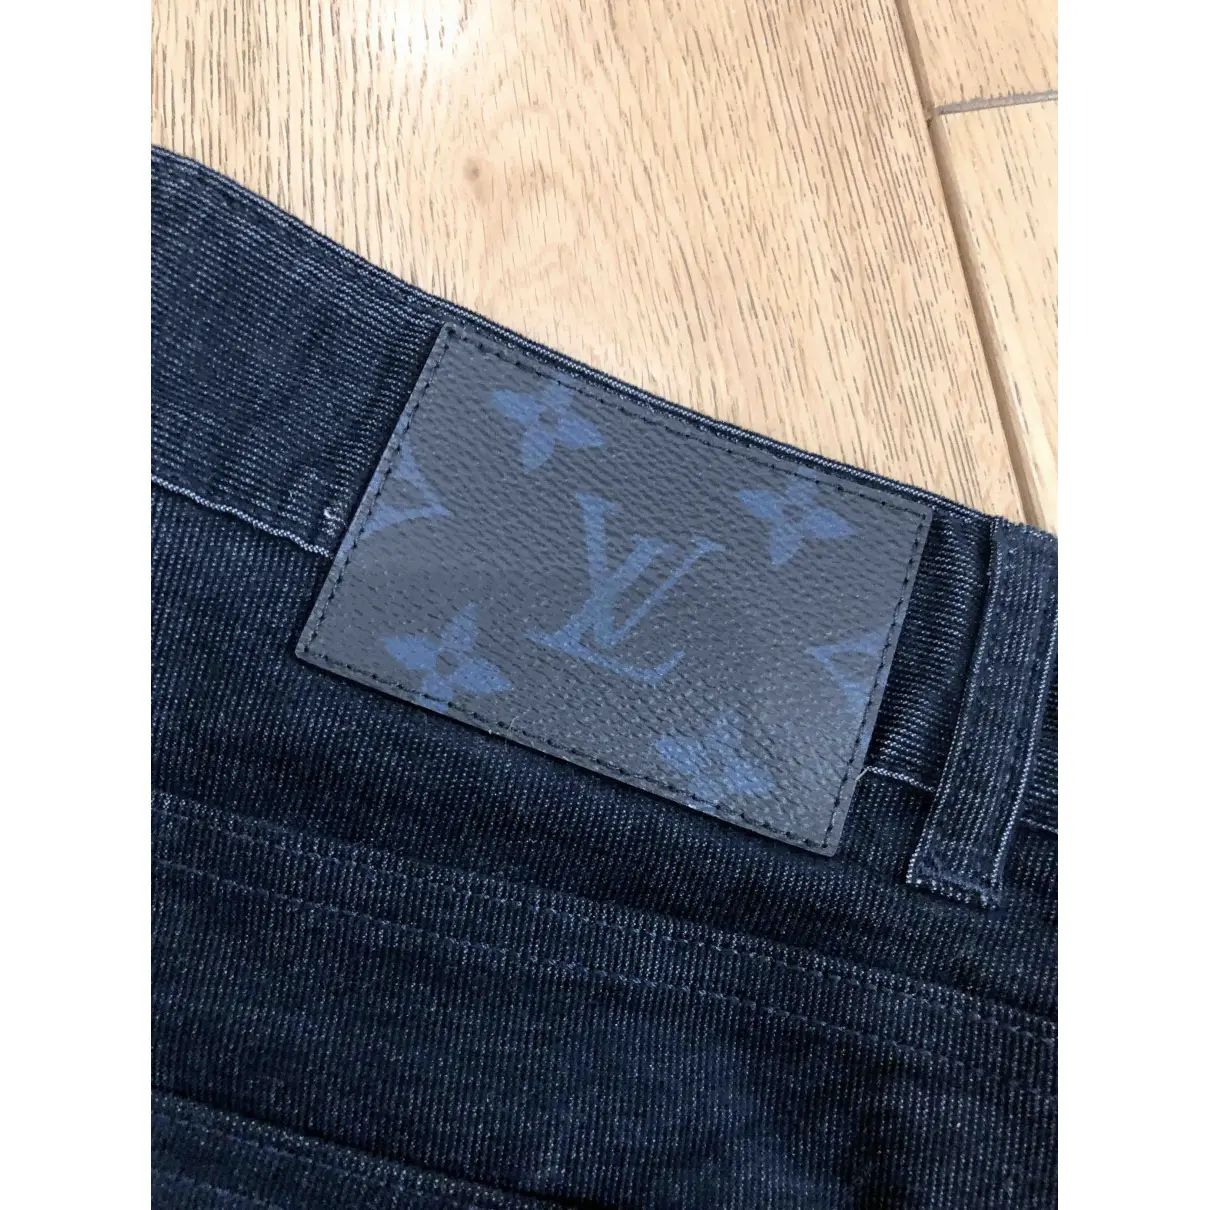 Trousers Louis Vuitton